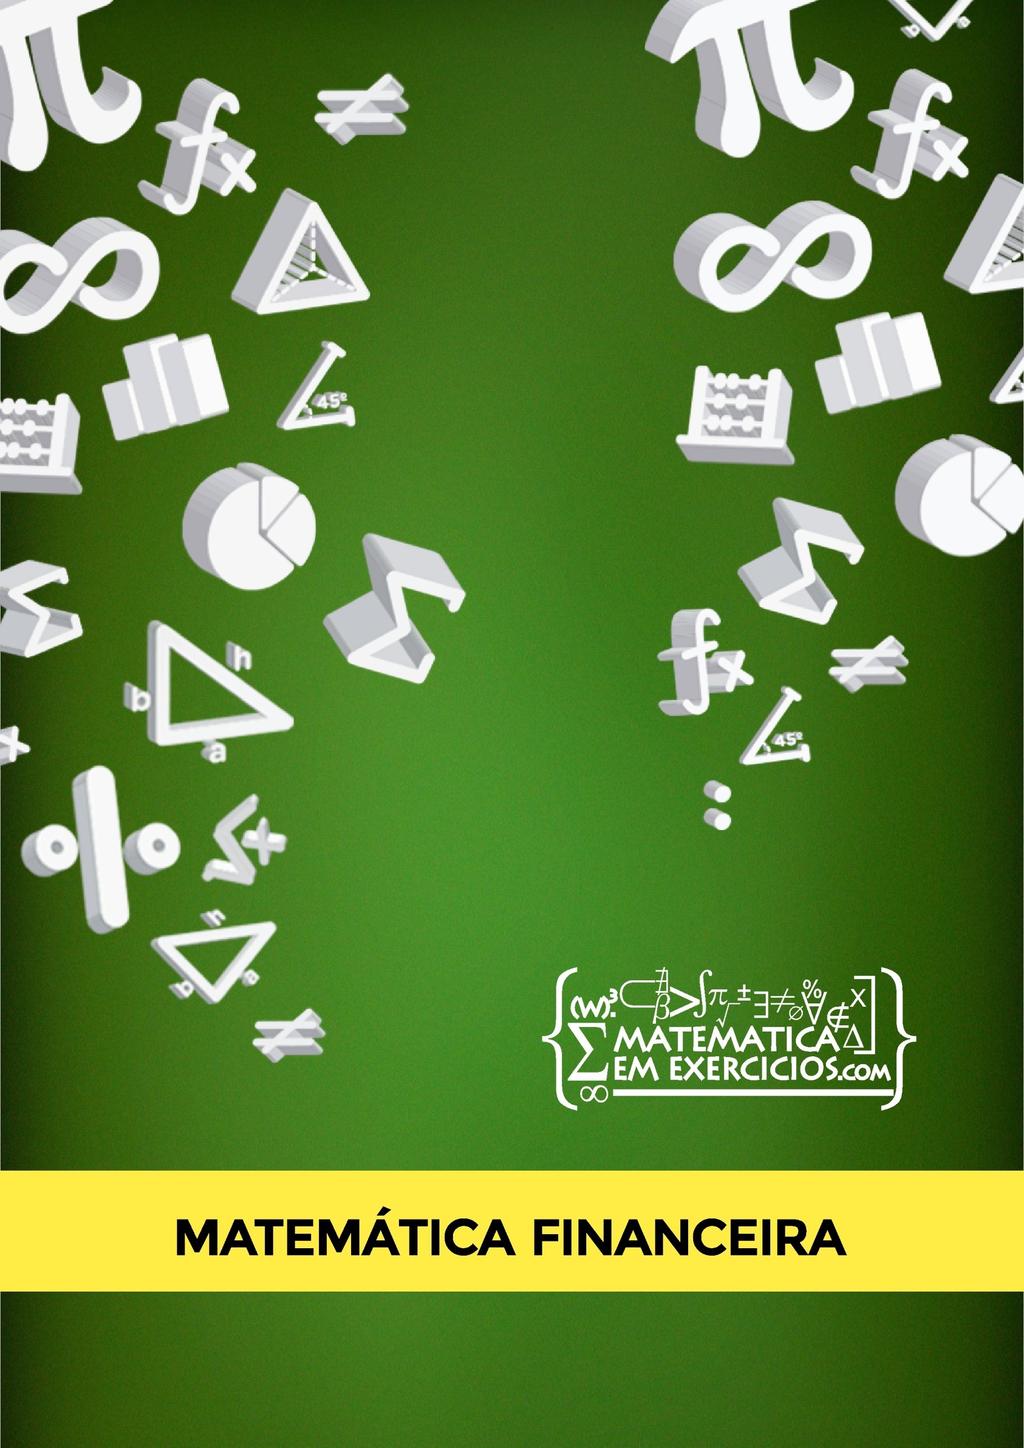 www.matematicaemexercicios.